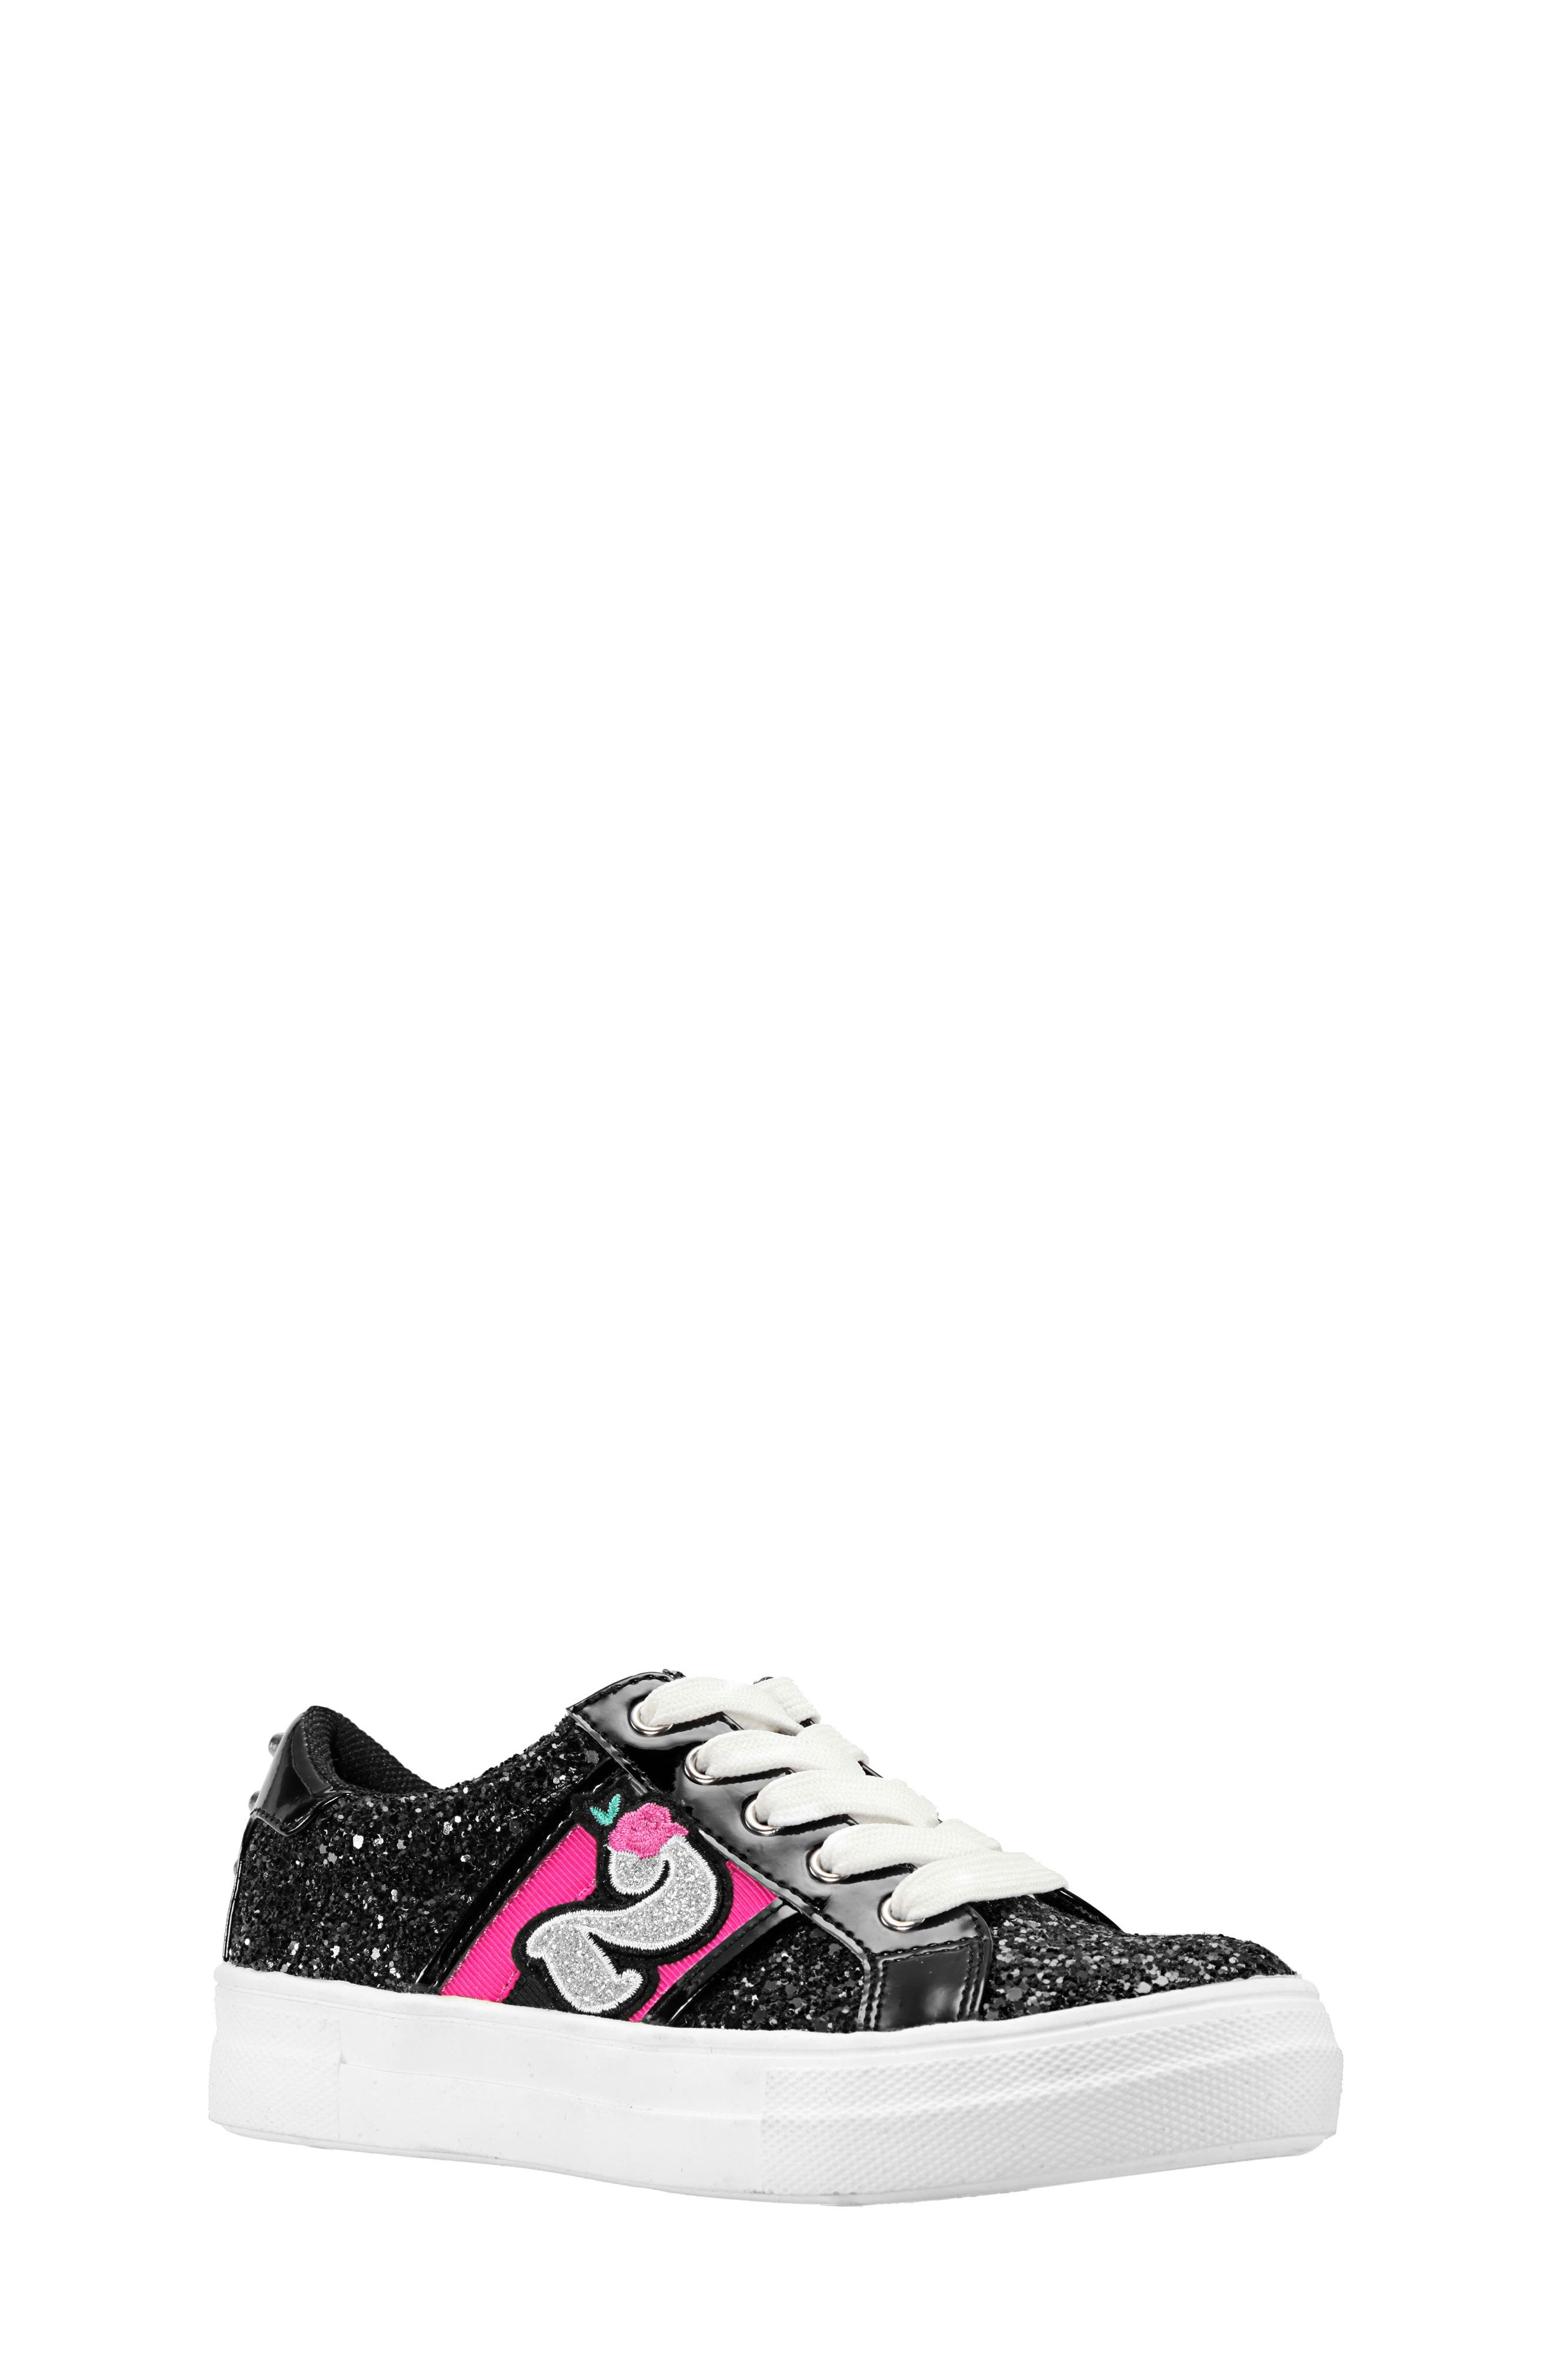 UPC 794378364269 product image for Toddler Girl's Nina Hazeline-N Glitter Sneaker, Size 10 M - Black | upcitemdb.com